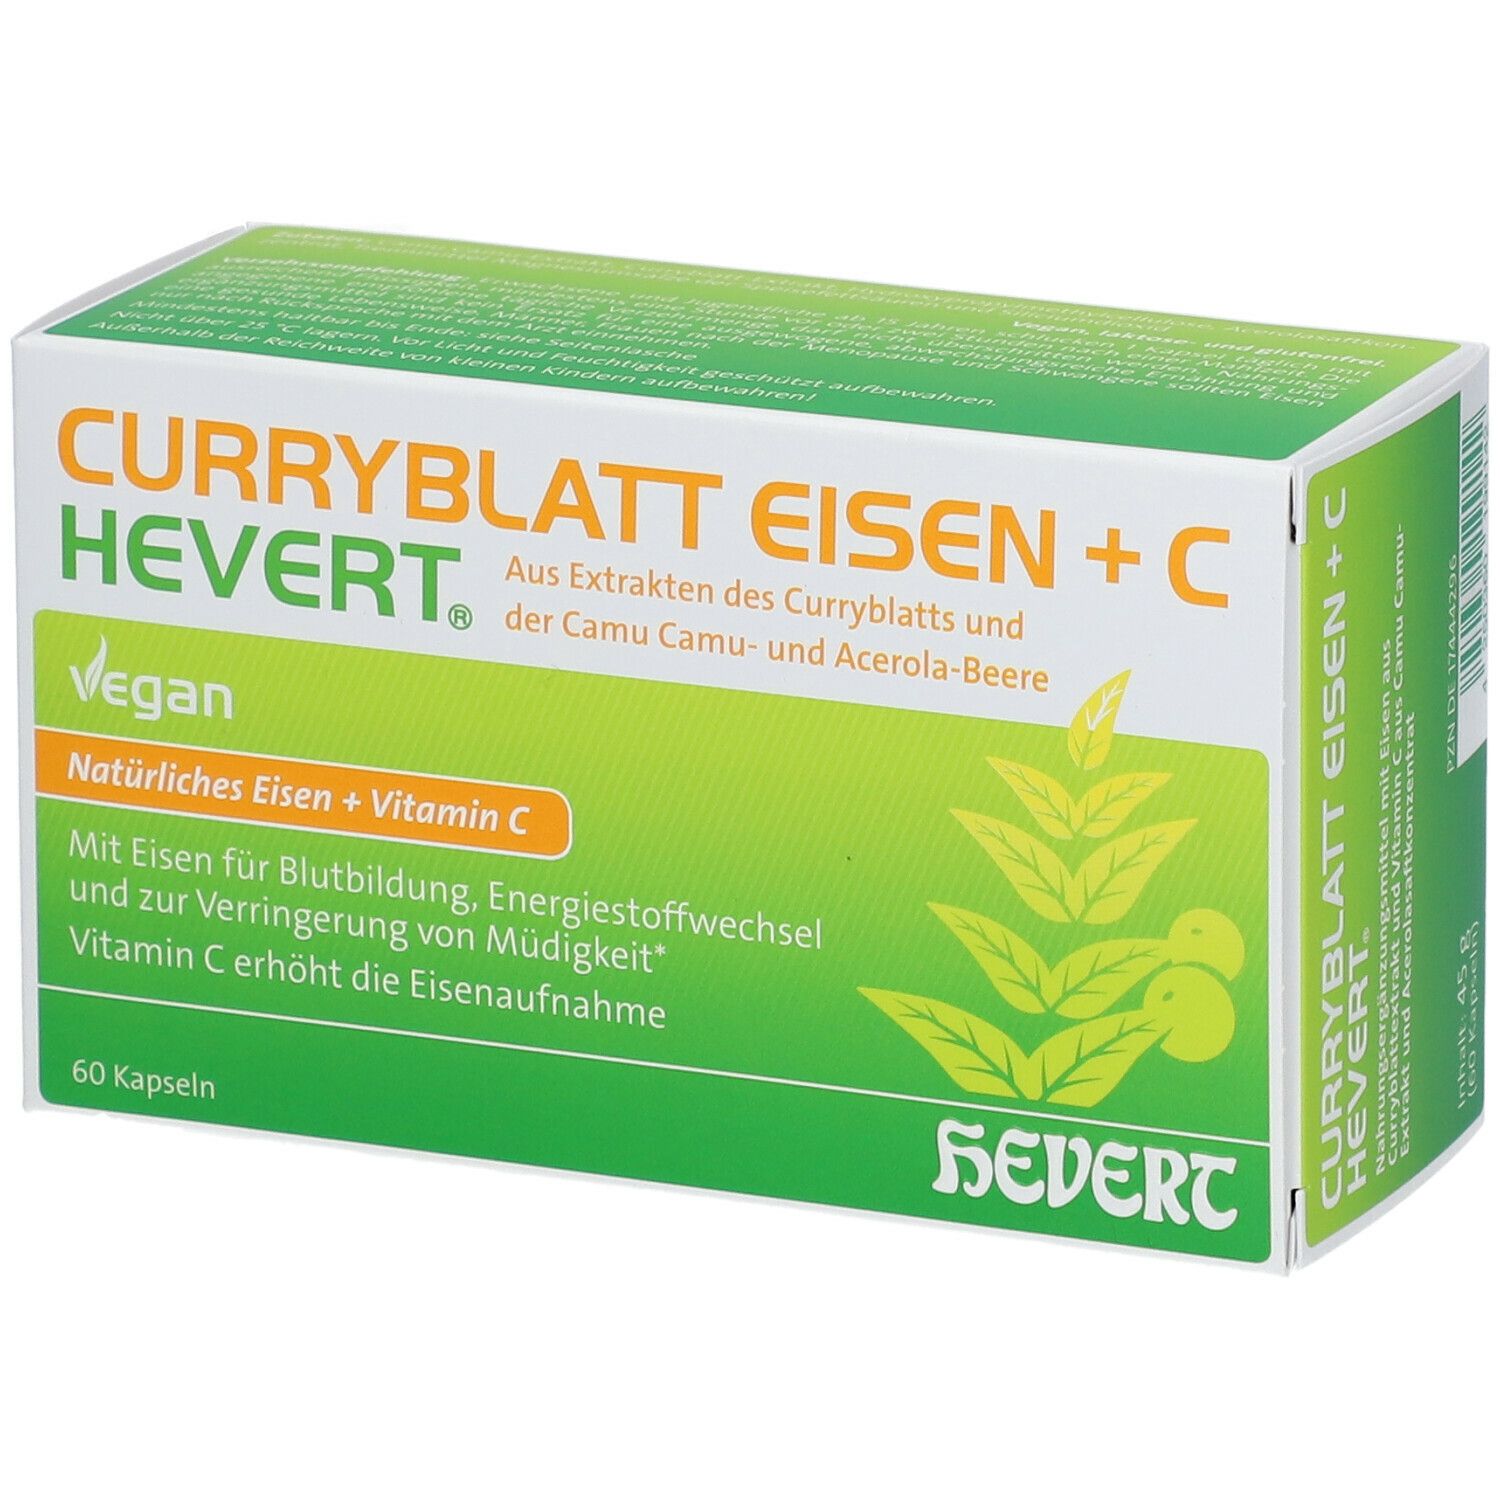 Curryblatt Eisen + C HEVERT®